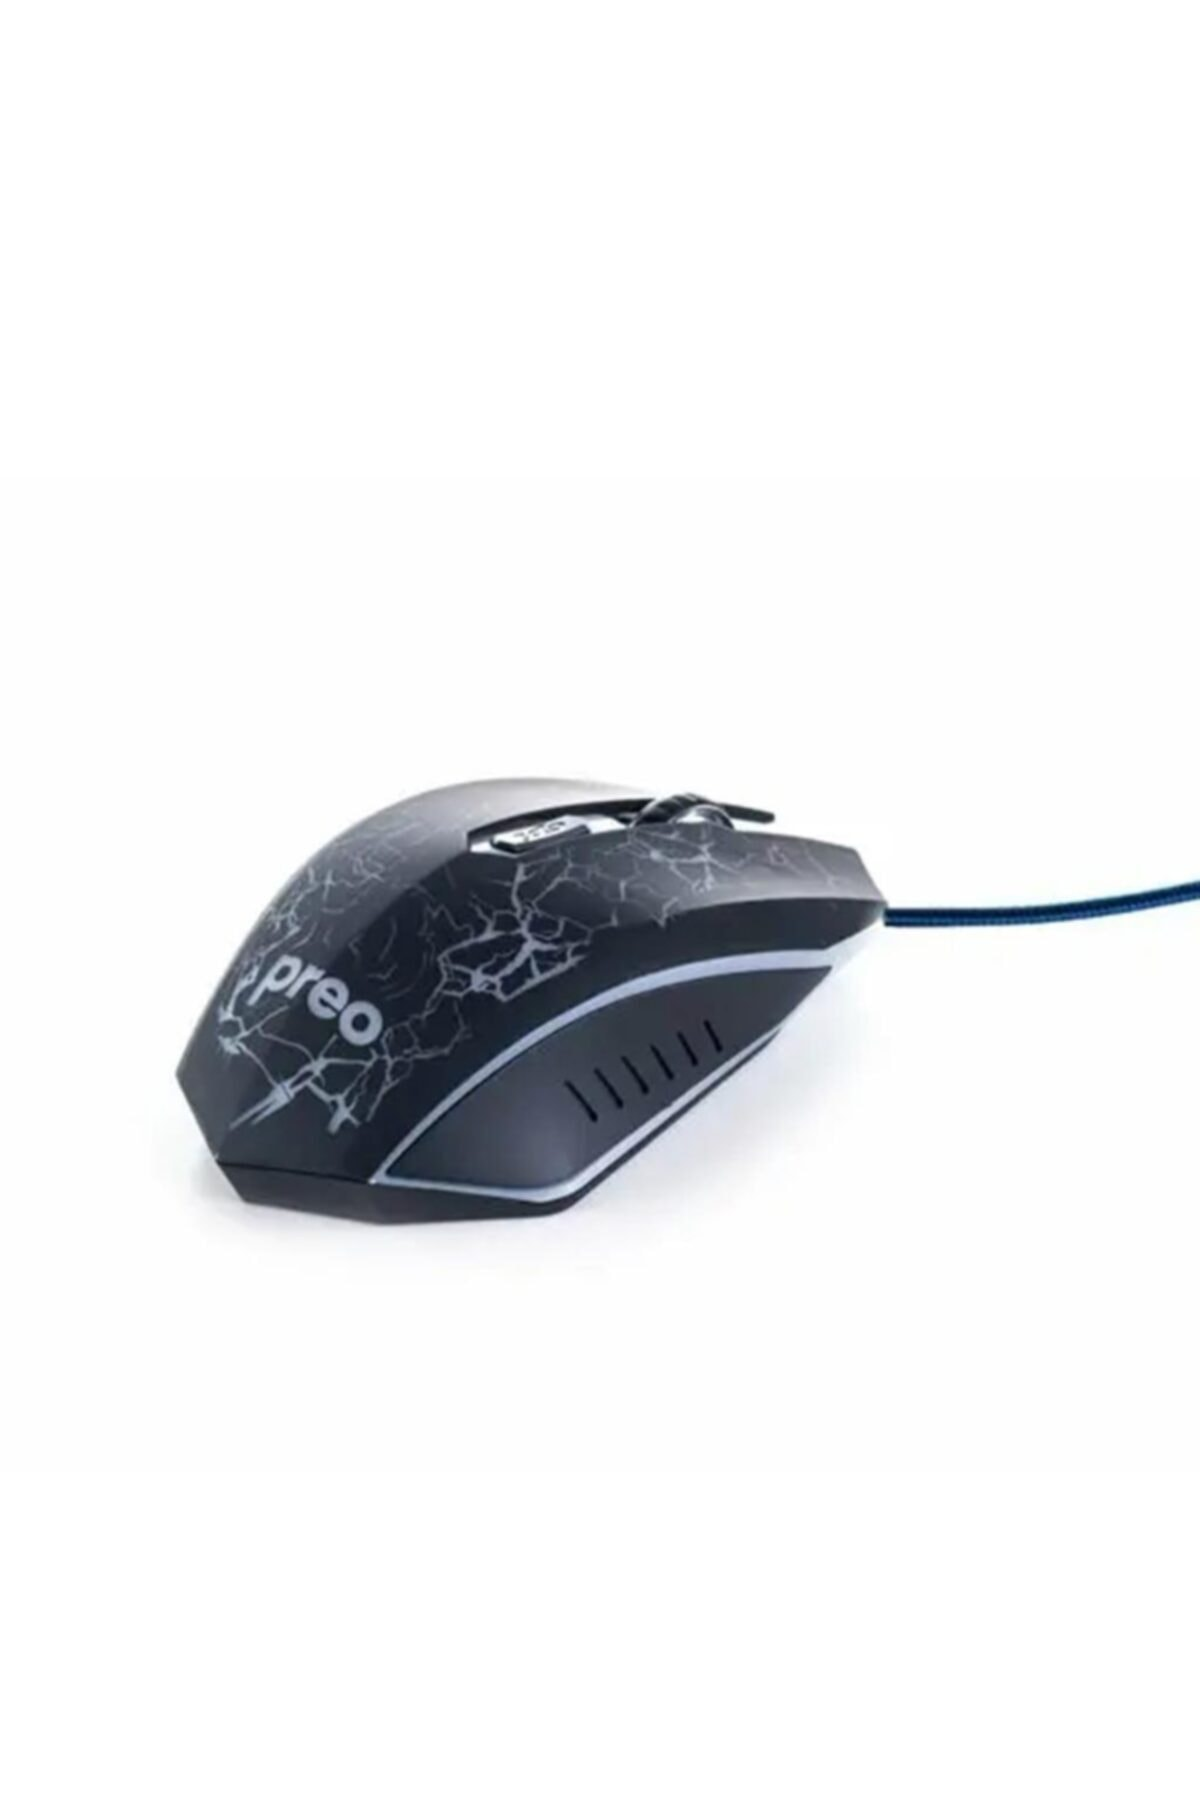 Preo M06 Optik Kablolu Oyuncu Mouse